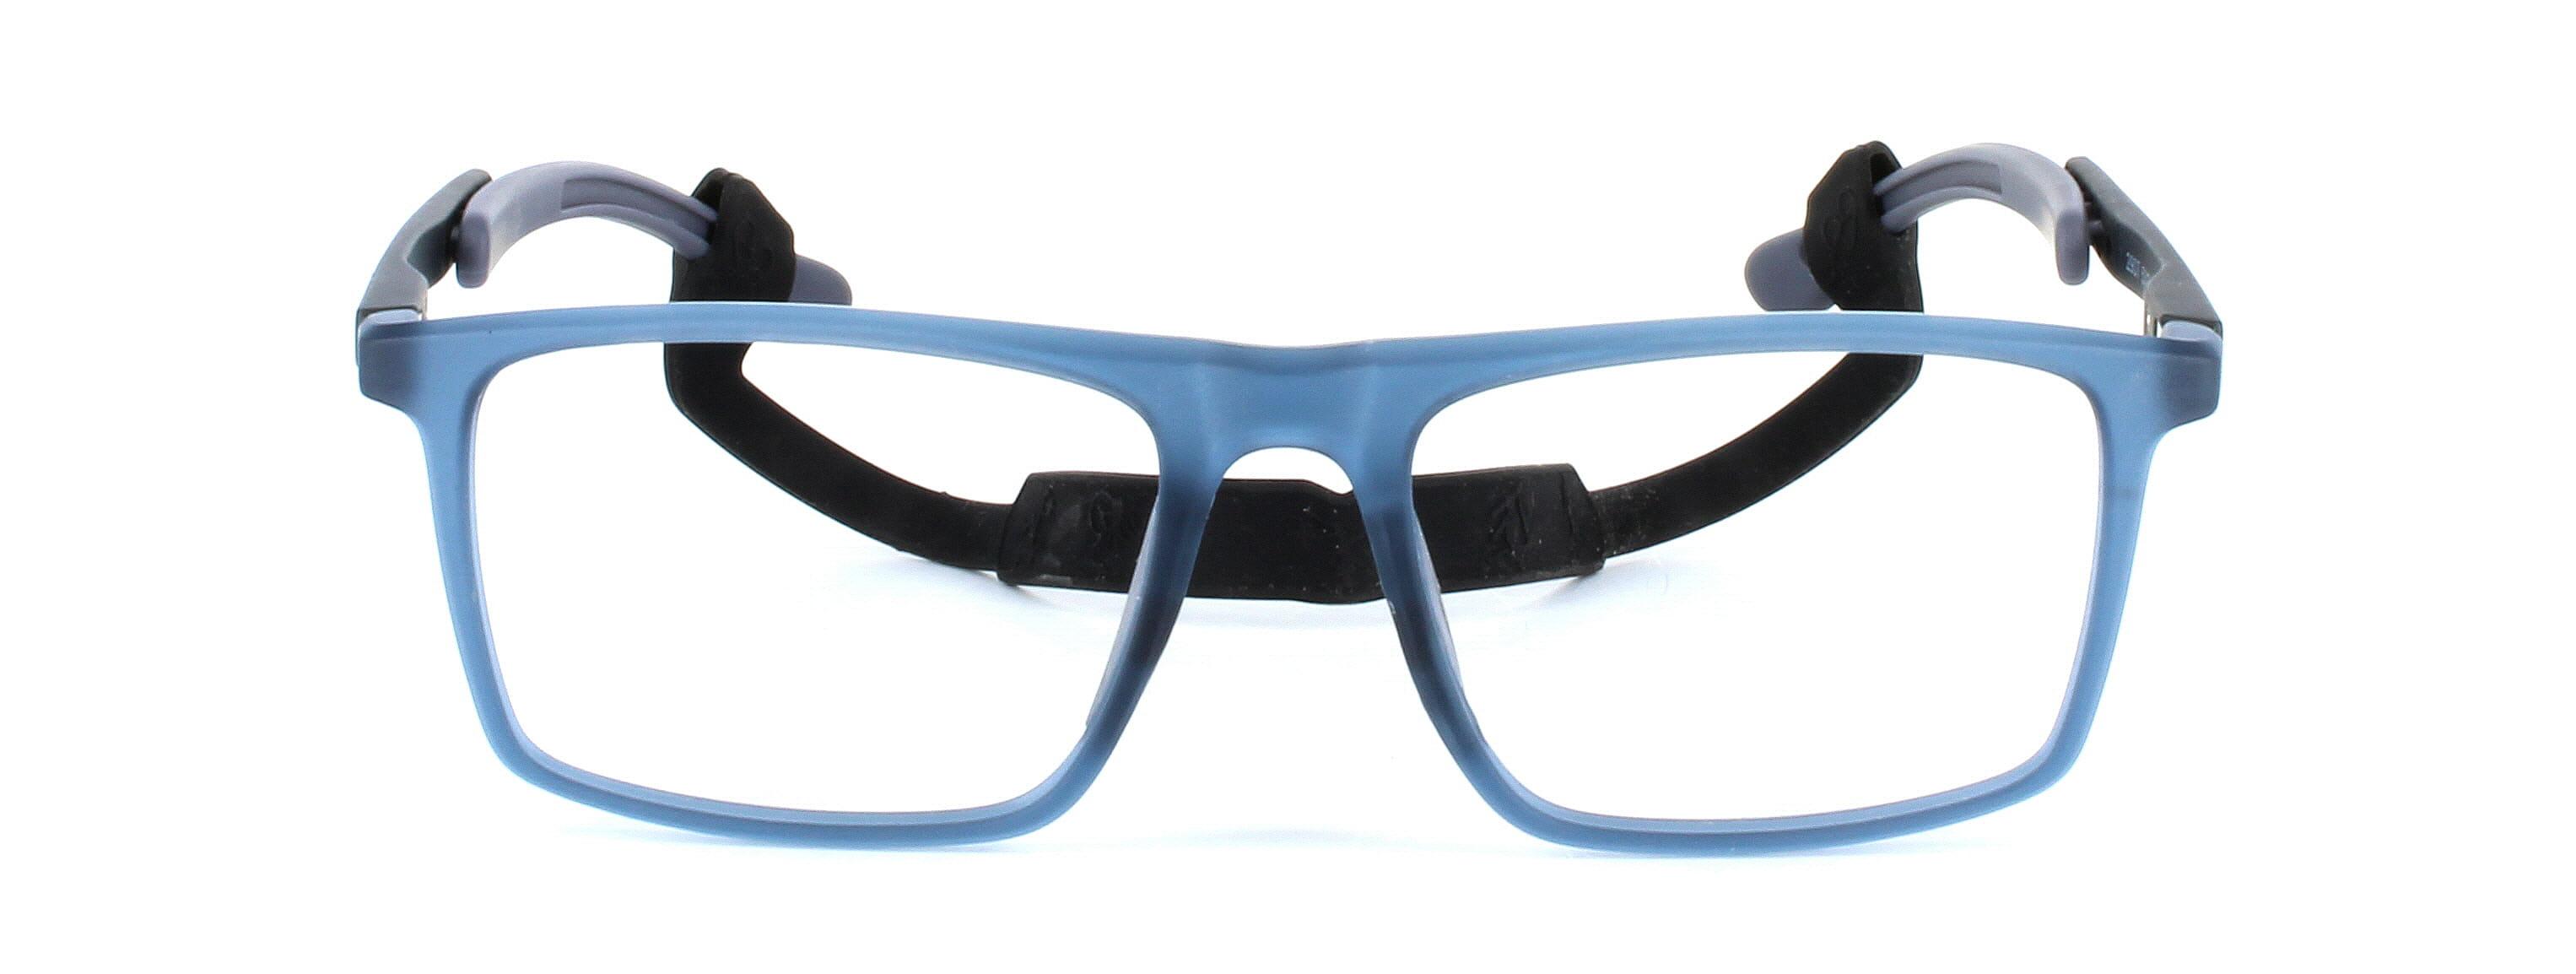 Jumper - unisex prescription sports glasses in matt blue - image view 5